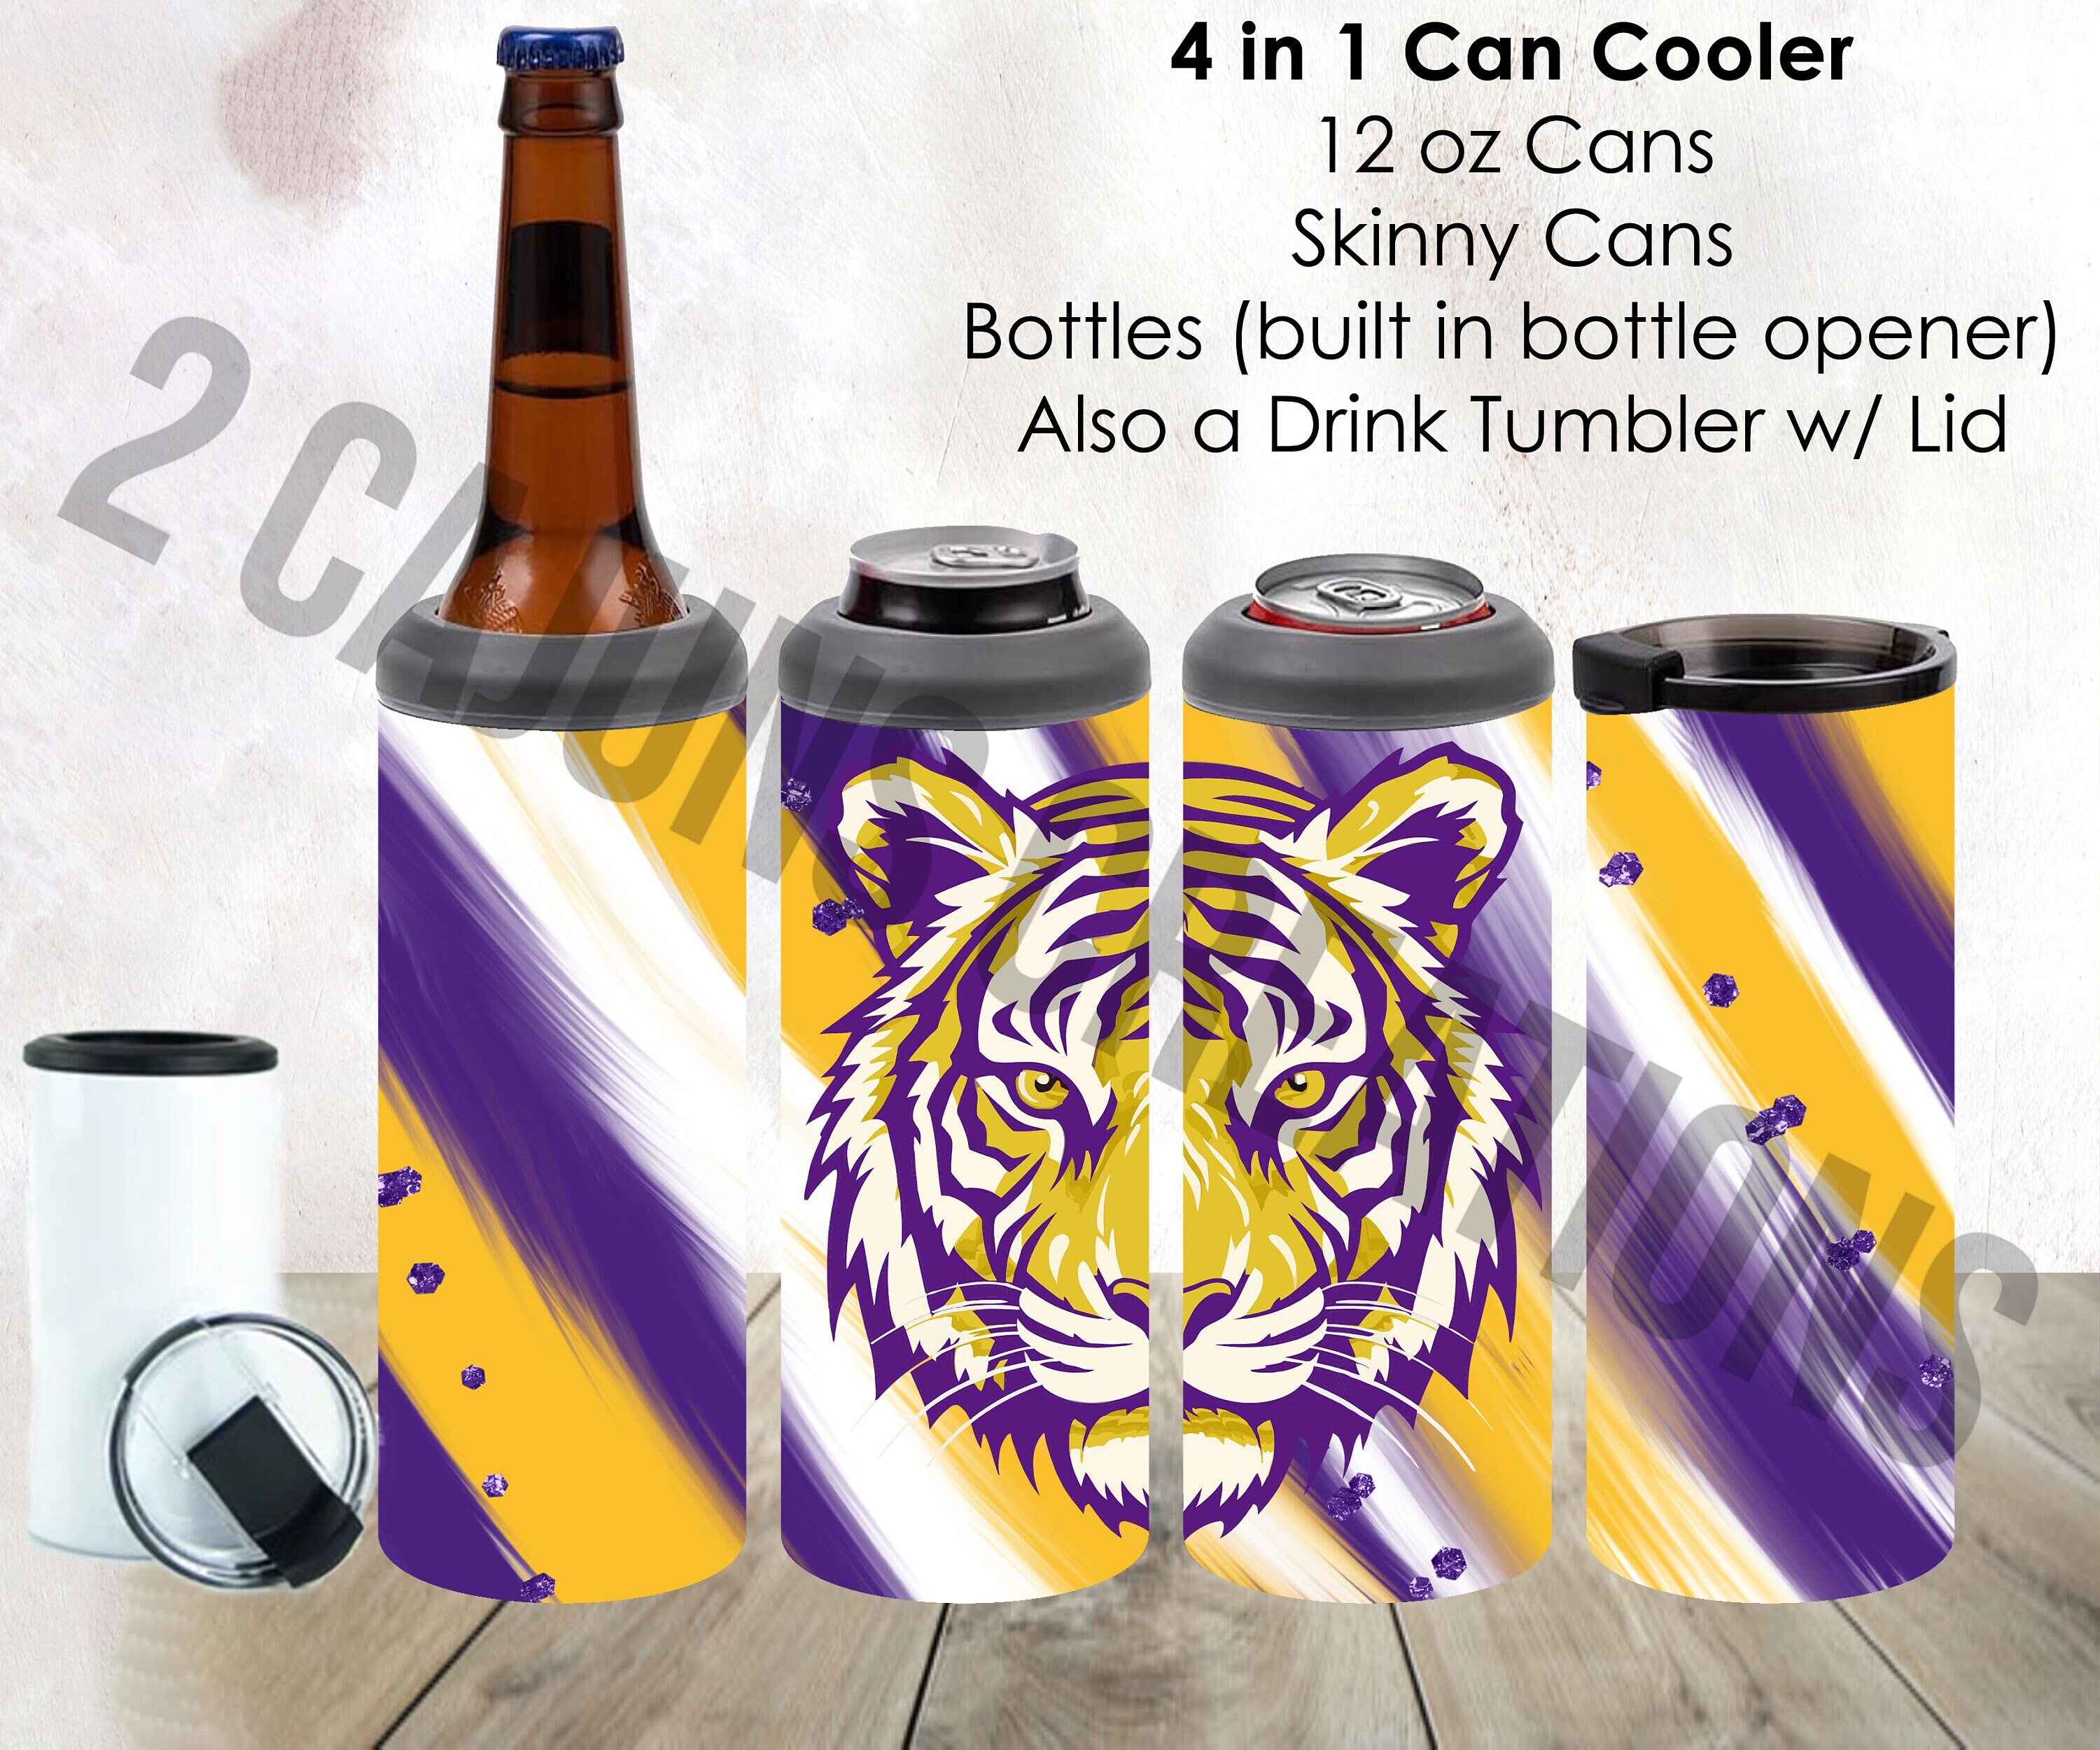 Lids LSU Tigers Tumbler and Bottle Gift Set